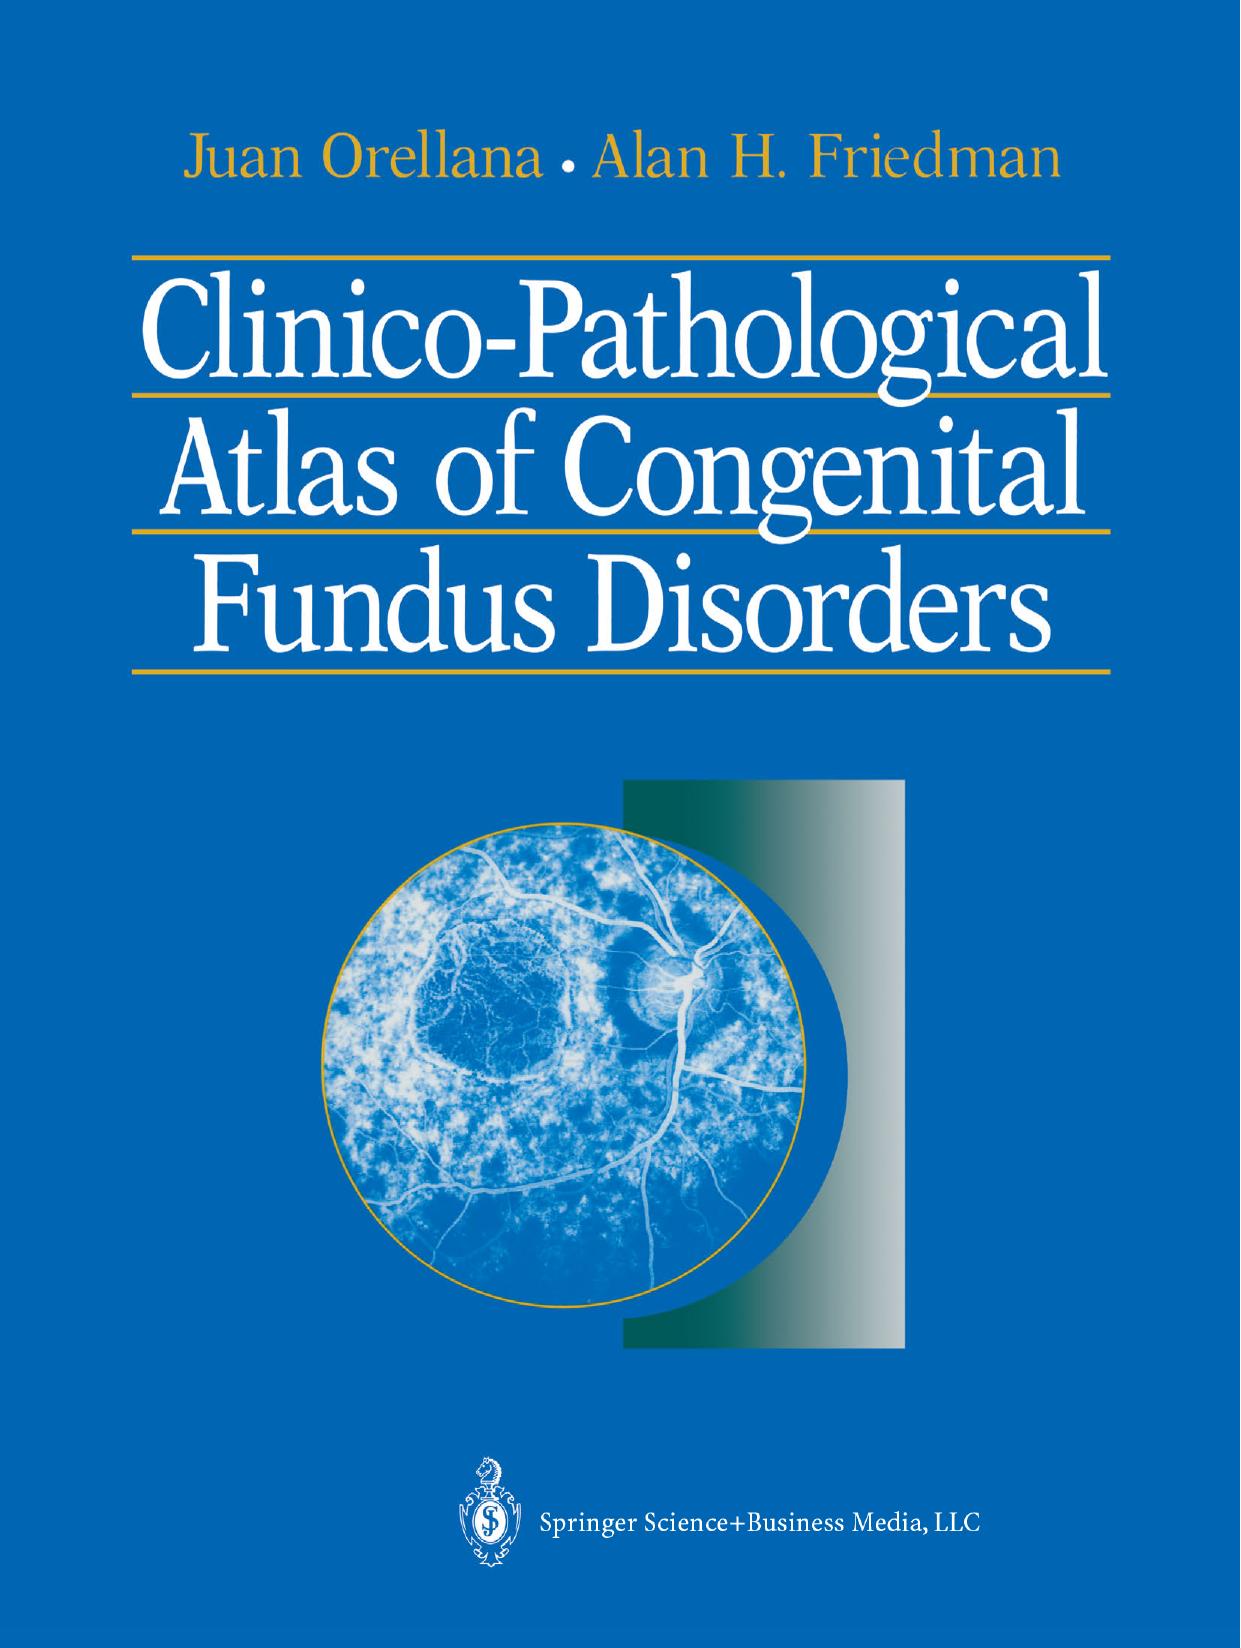 Clinico-Pathological Atlas of Congenital Fundus Disorders 1993